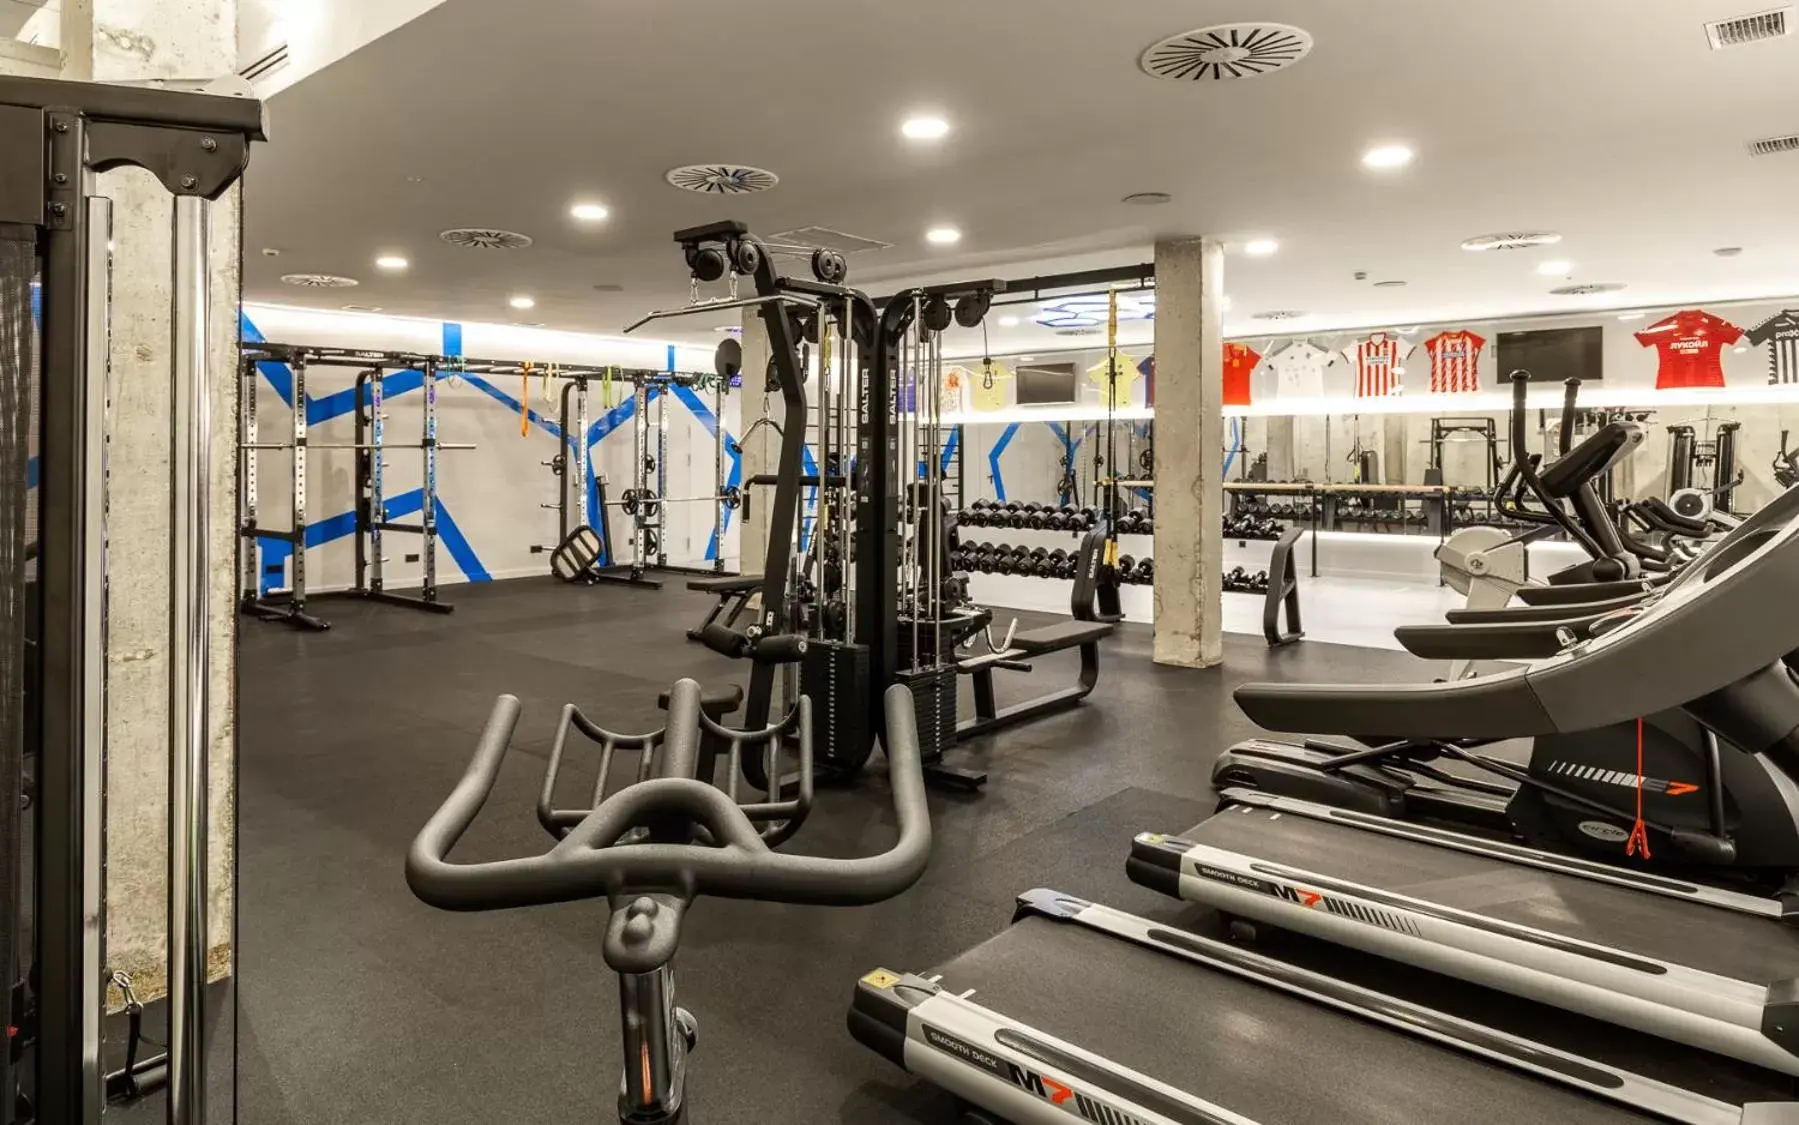 Fitness centre/facilities, Fitness Center/Facilities in Parador de El Saler